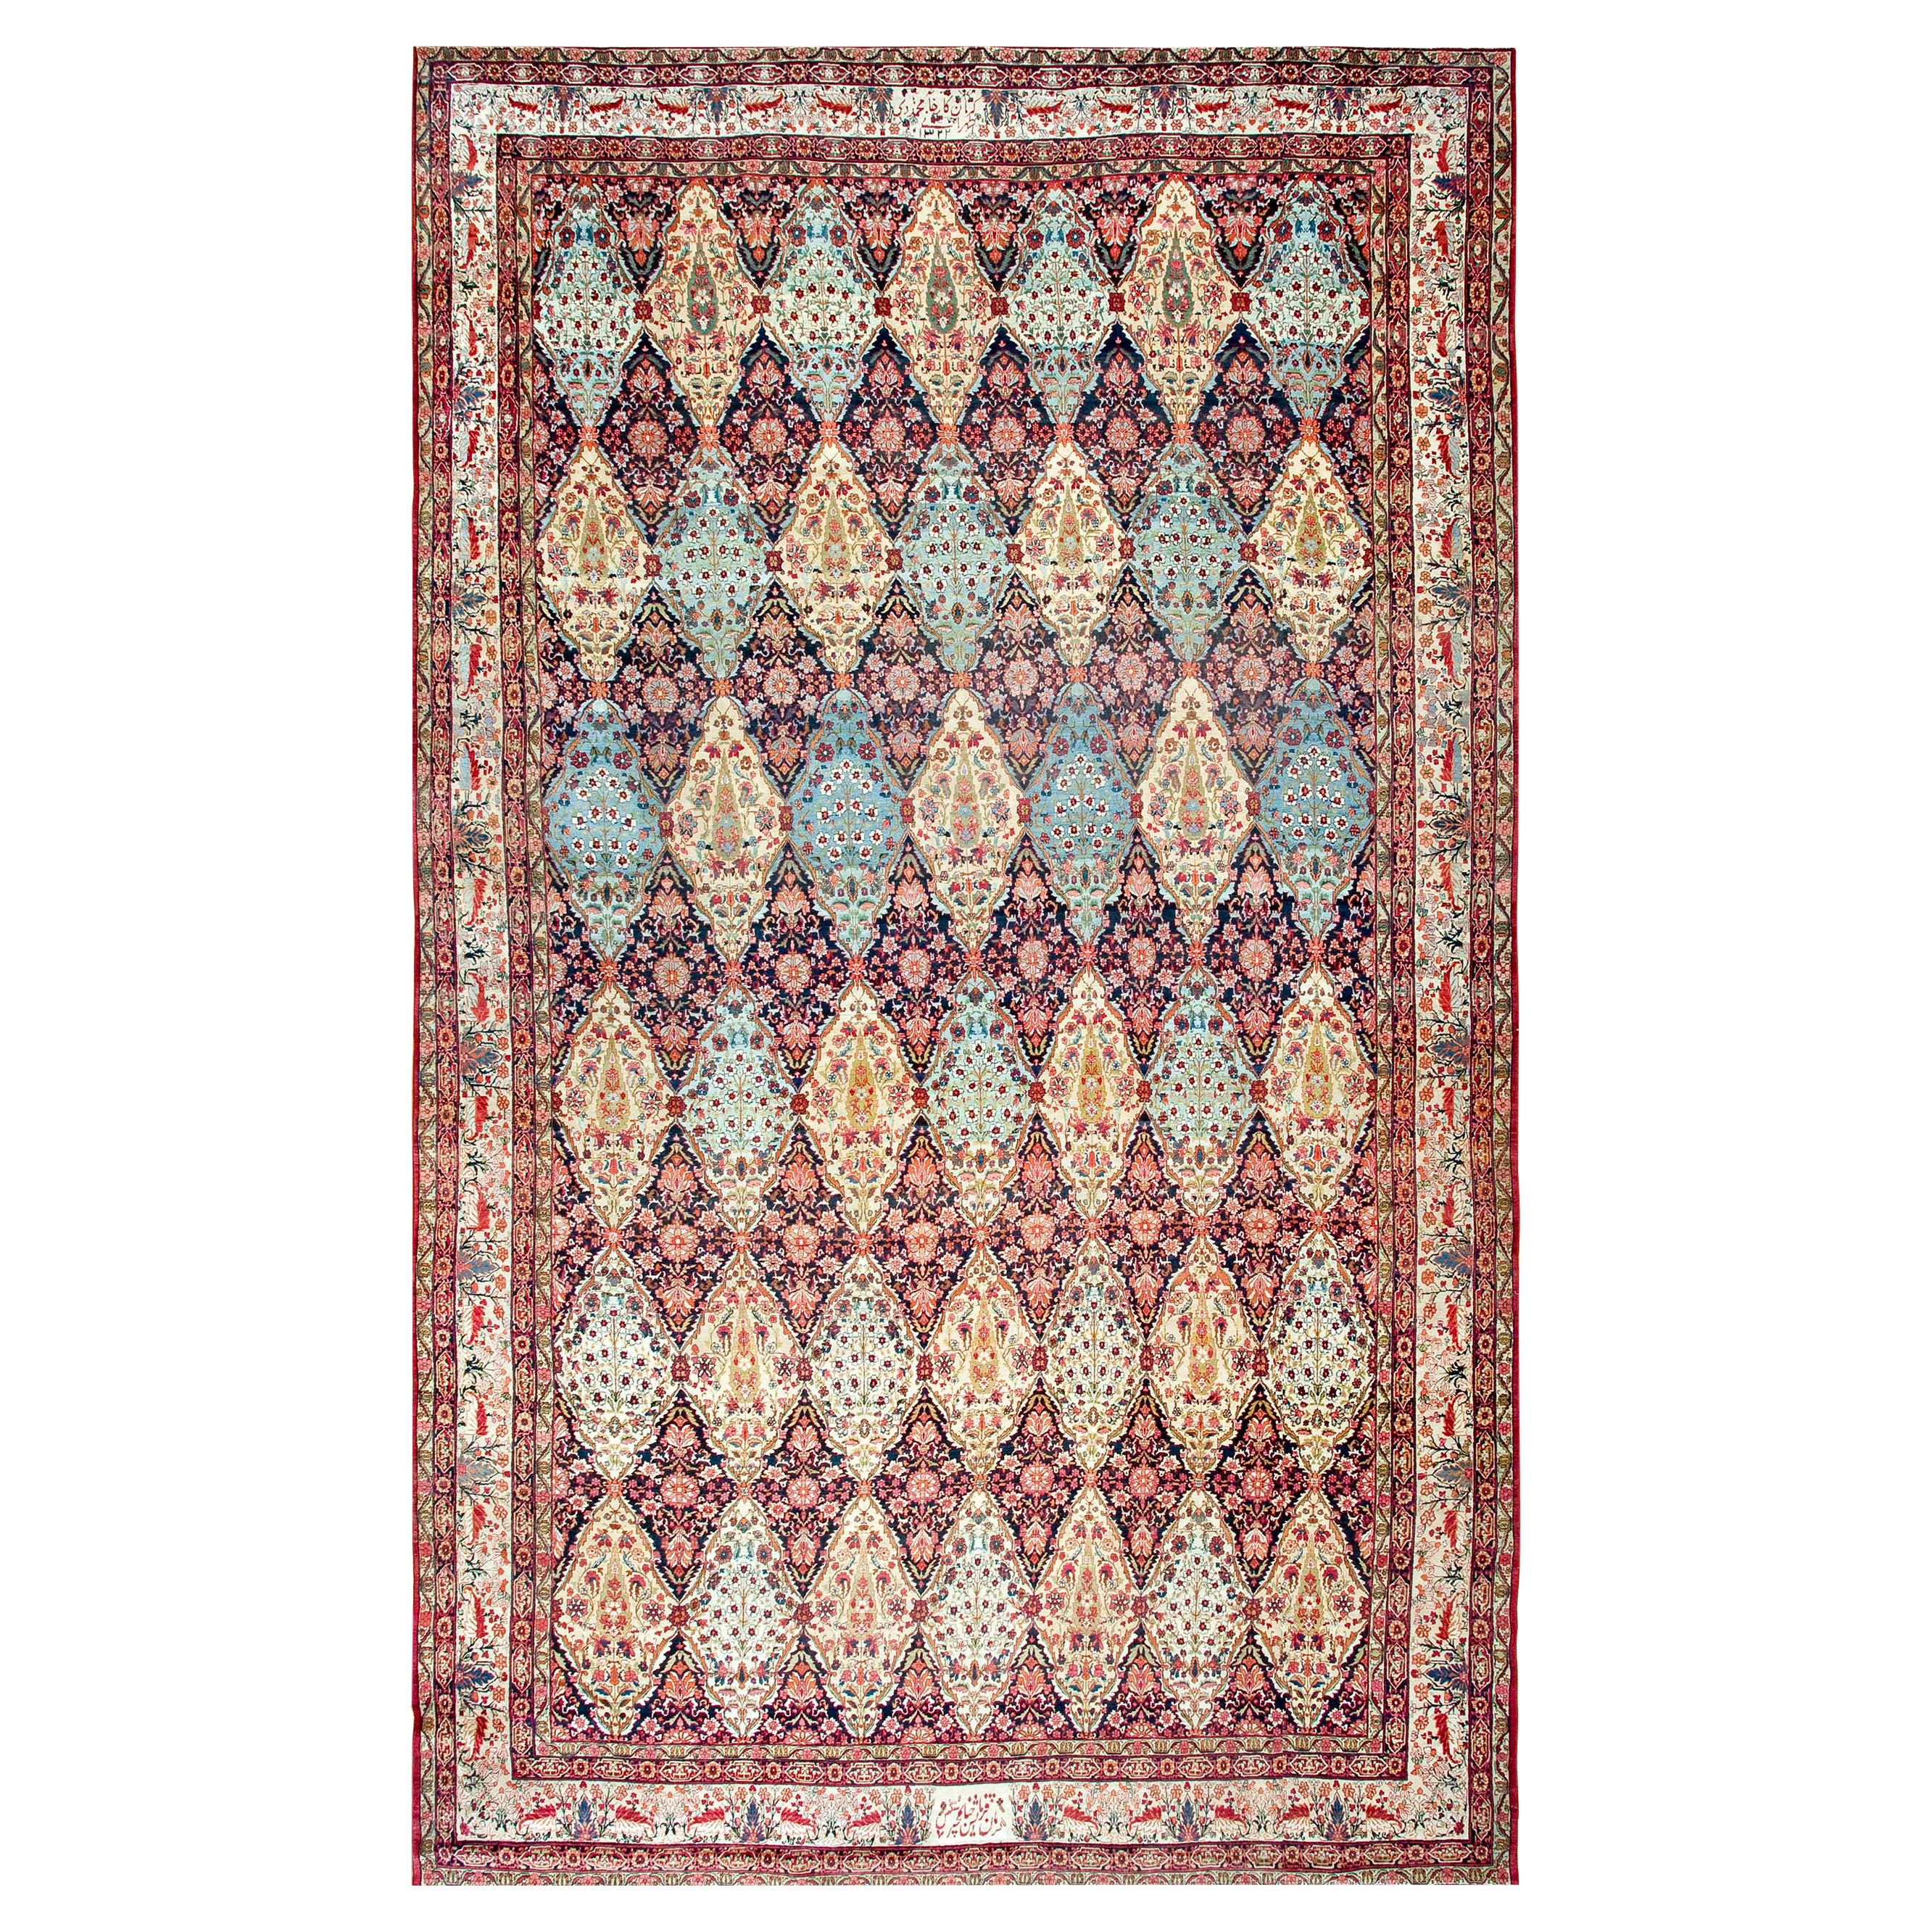 19th Century Persian Kerman Laver Carpet ( 11'6" x 19'8" - 350 x 599 cm ) For Sale